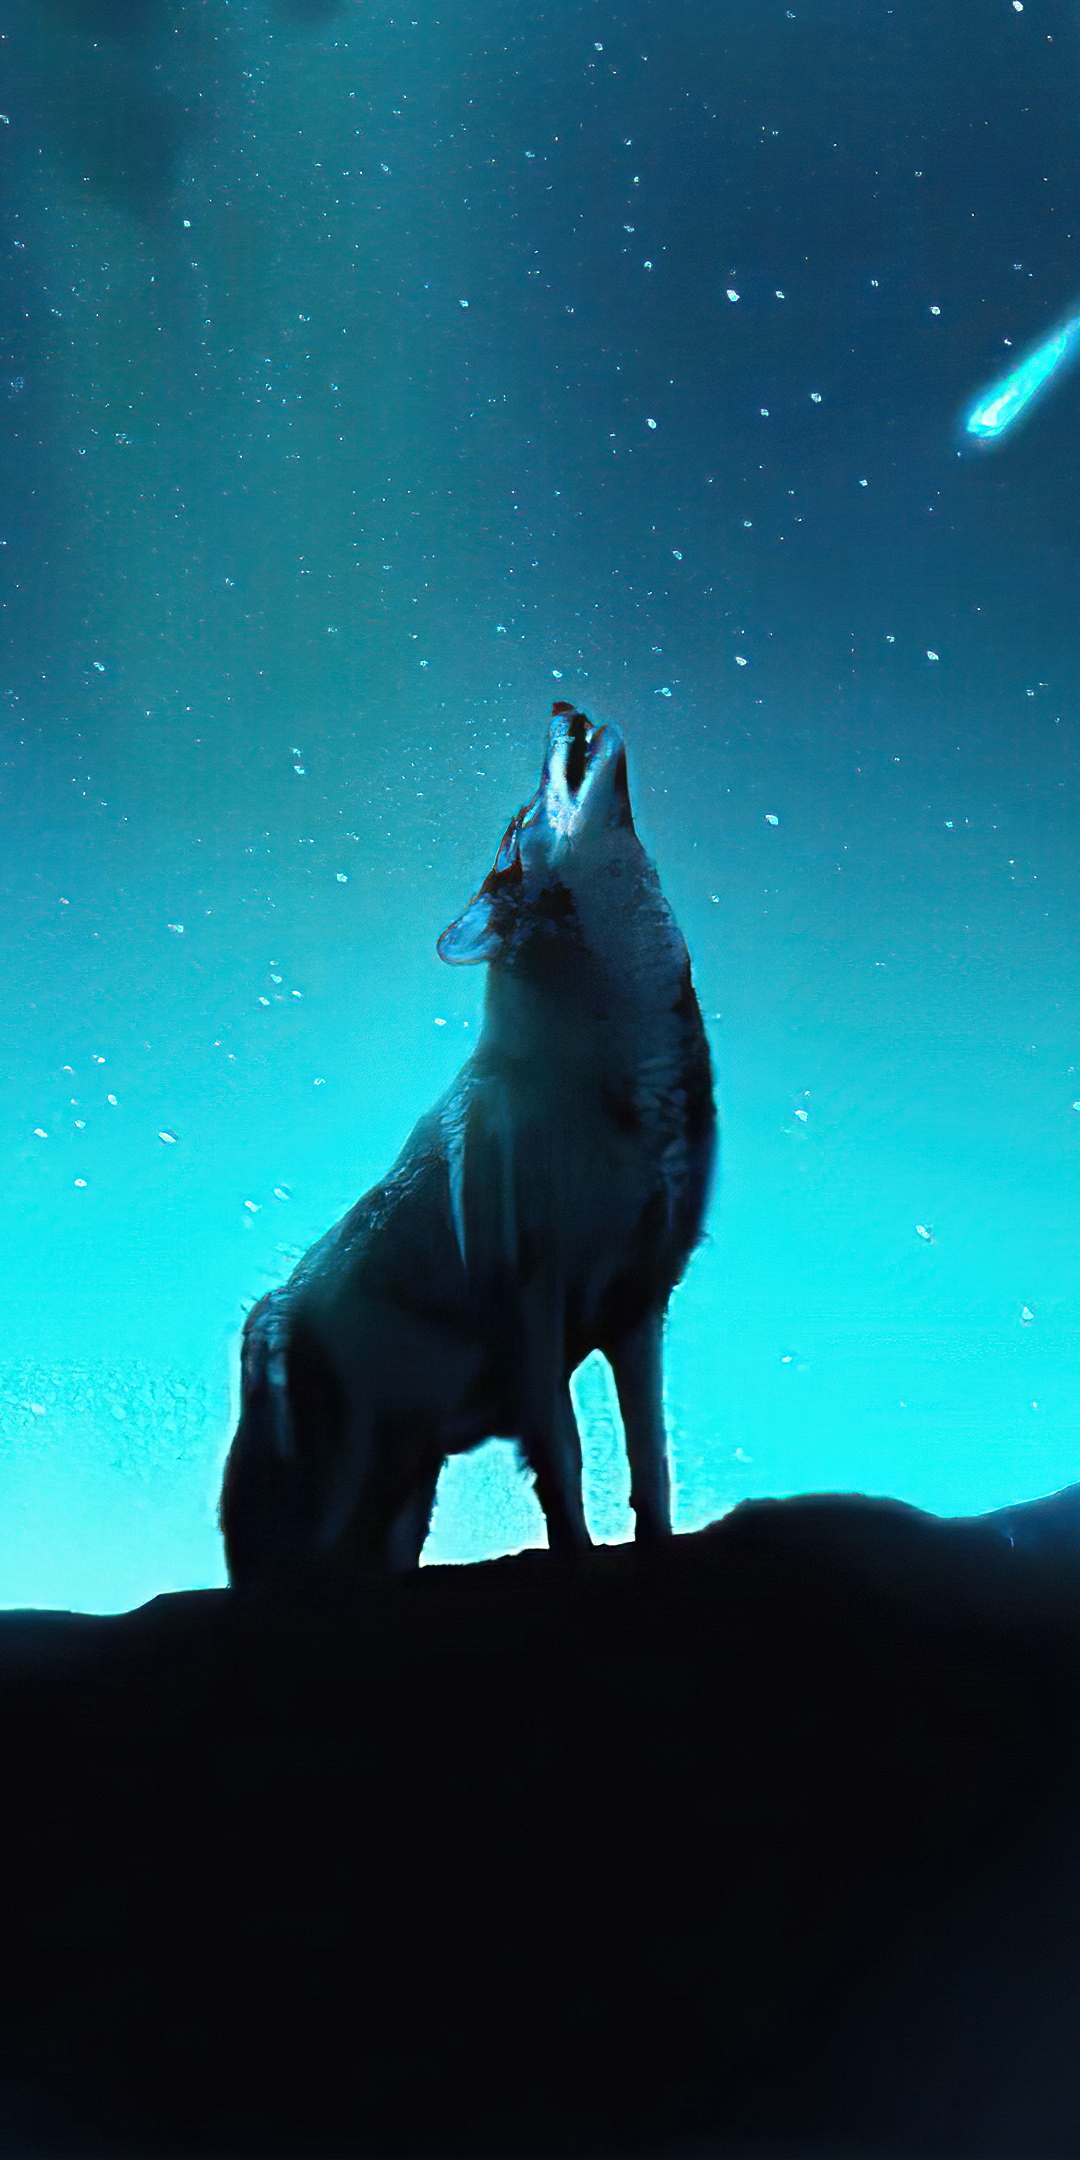 Fox howling, night, northern lights, stars, 1080x2160 wallpaper